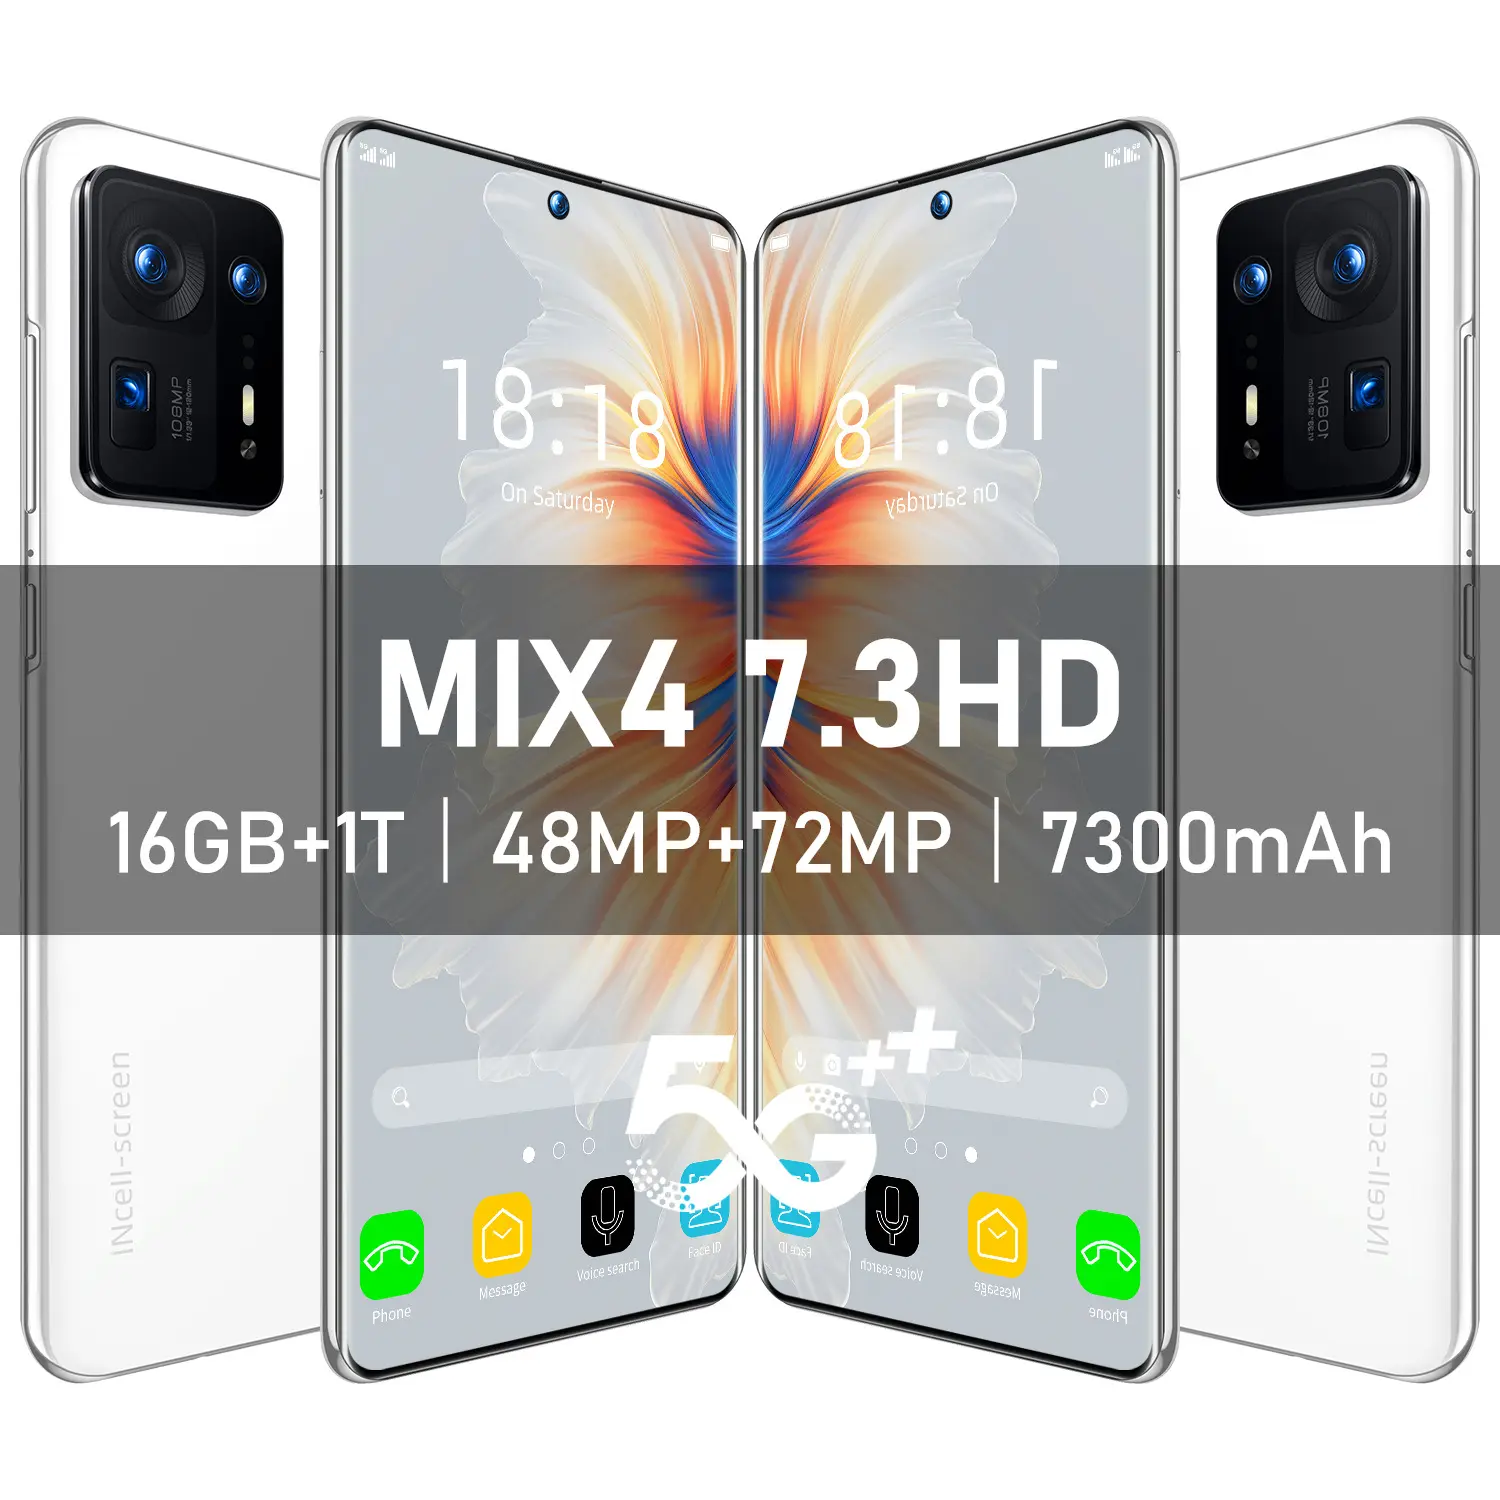 Ponsel lintas batas MIX4 harga rendah 7.3 "layar besar definisi tinggi perforasi asli Android 8.1 terjual 8 juta piksel